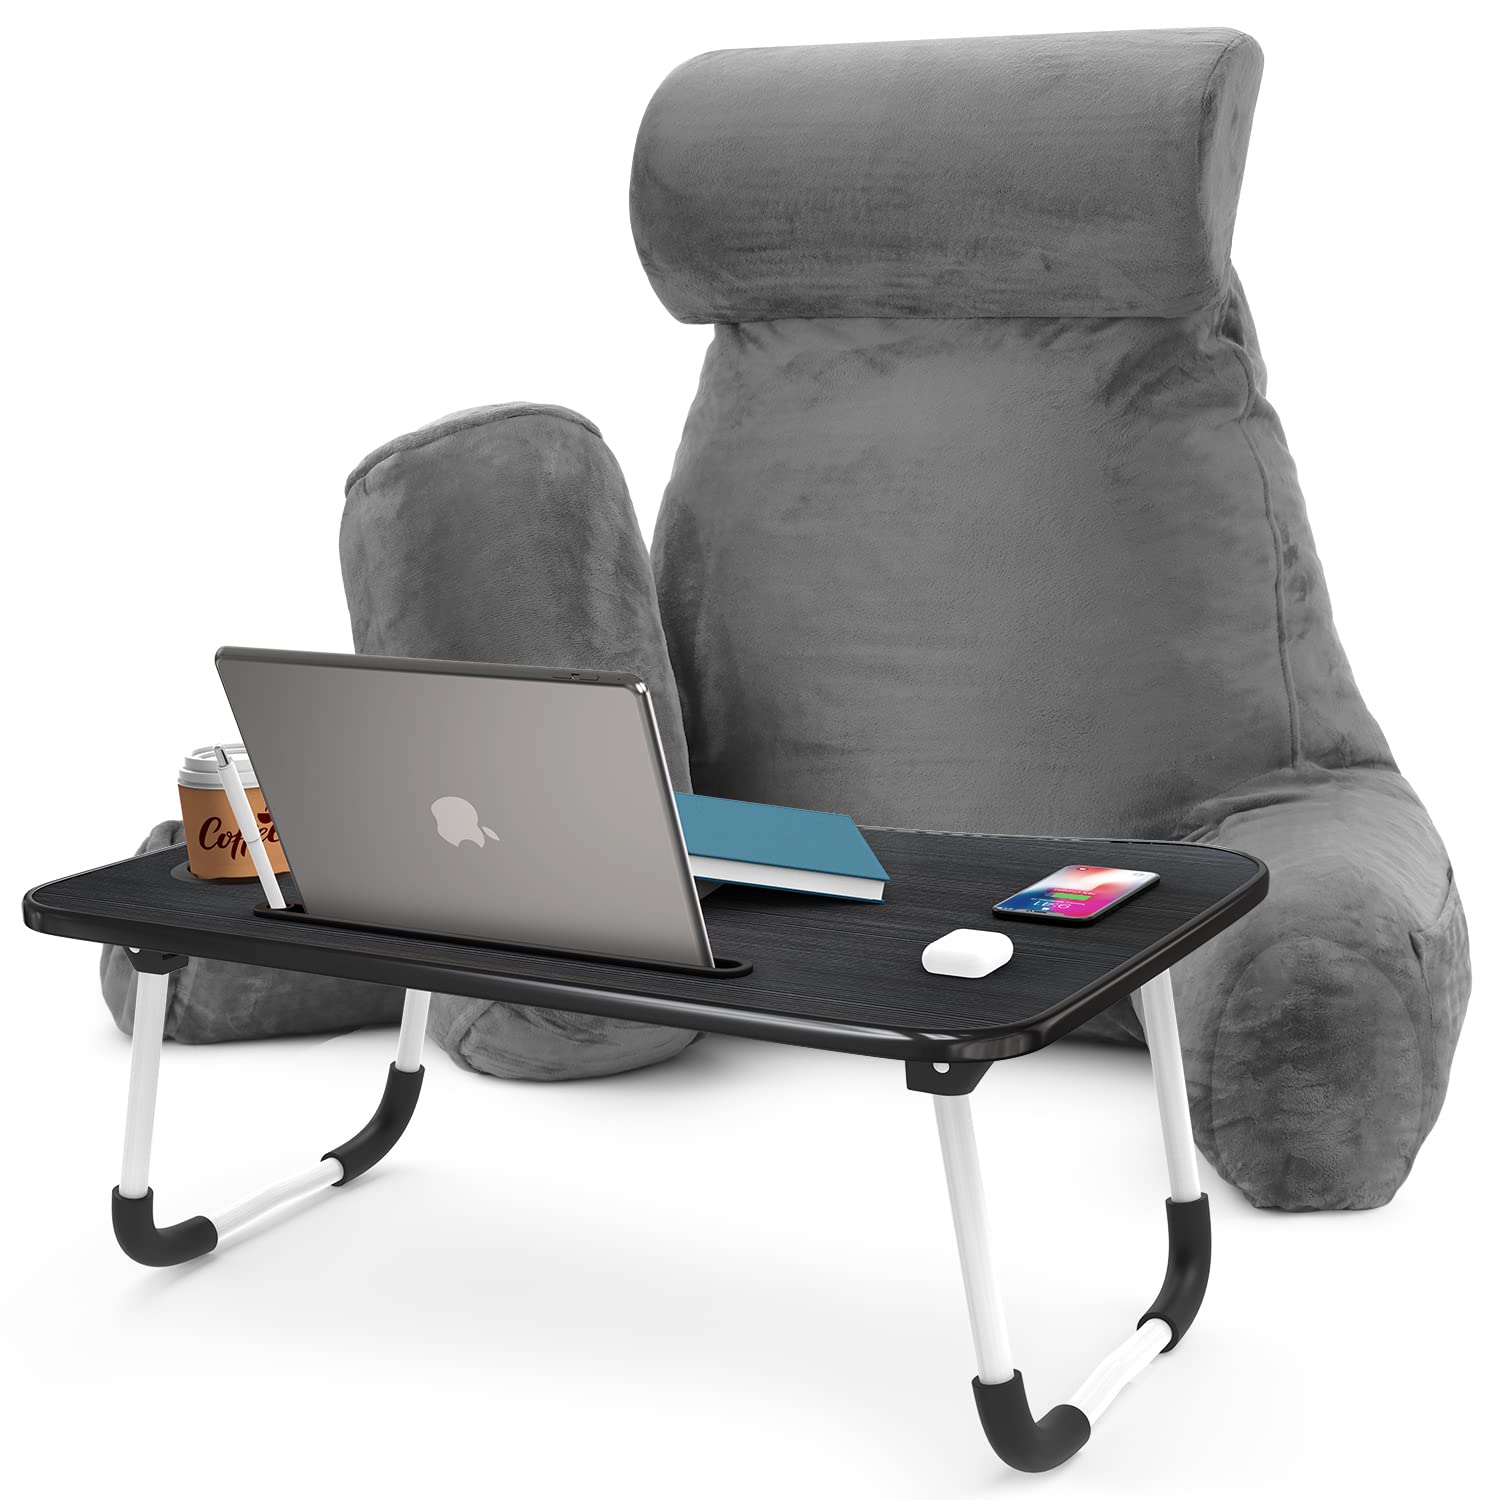 Nestl Large Bed Reading Backrest w/ Head/Neck & Leg Pillows (Gray) + Folding Laptop Desk $47.77 + Free Shipping